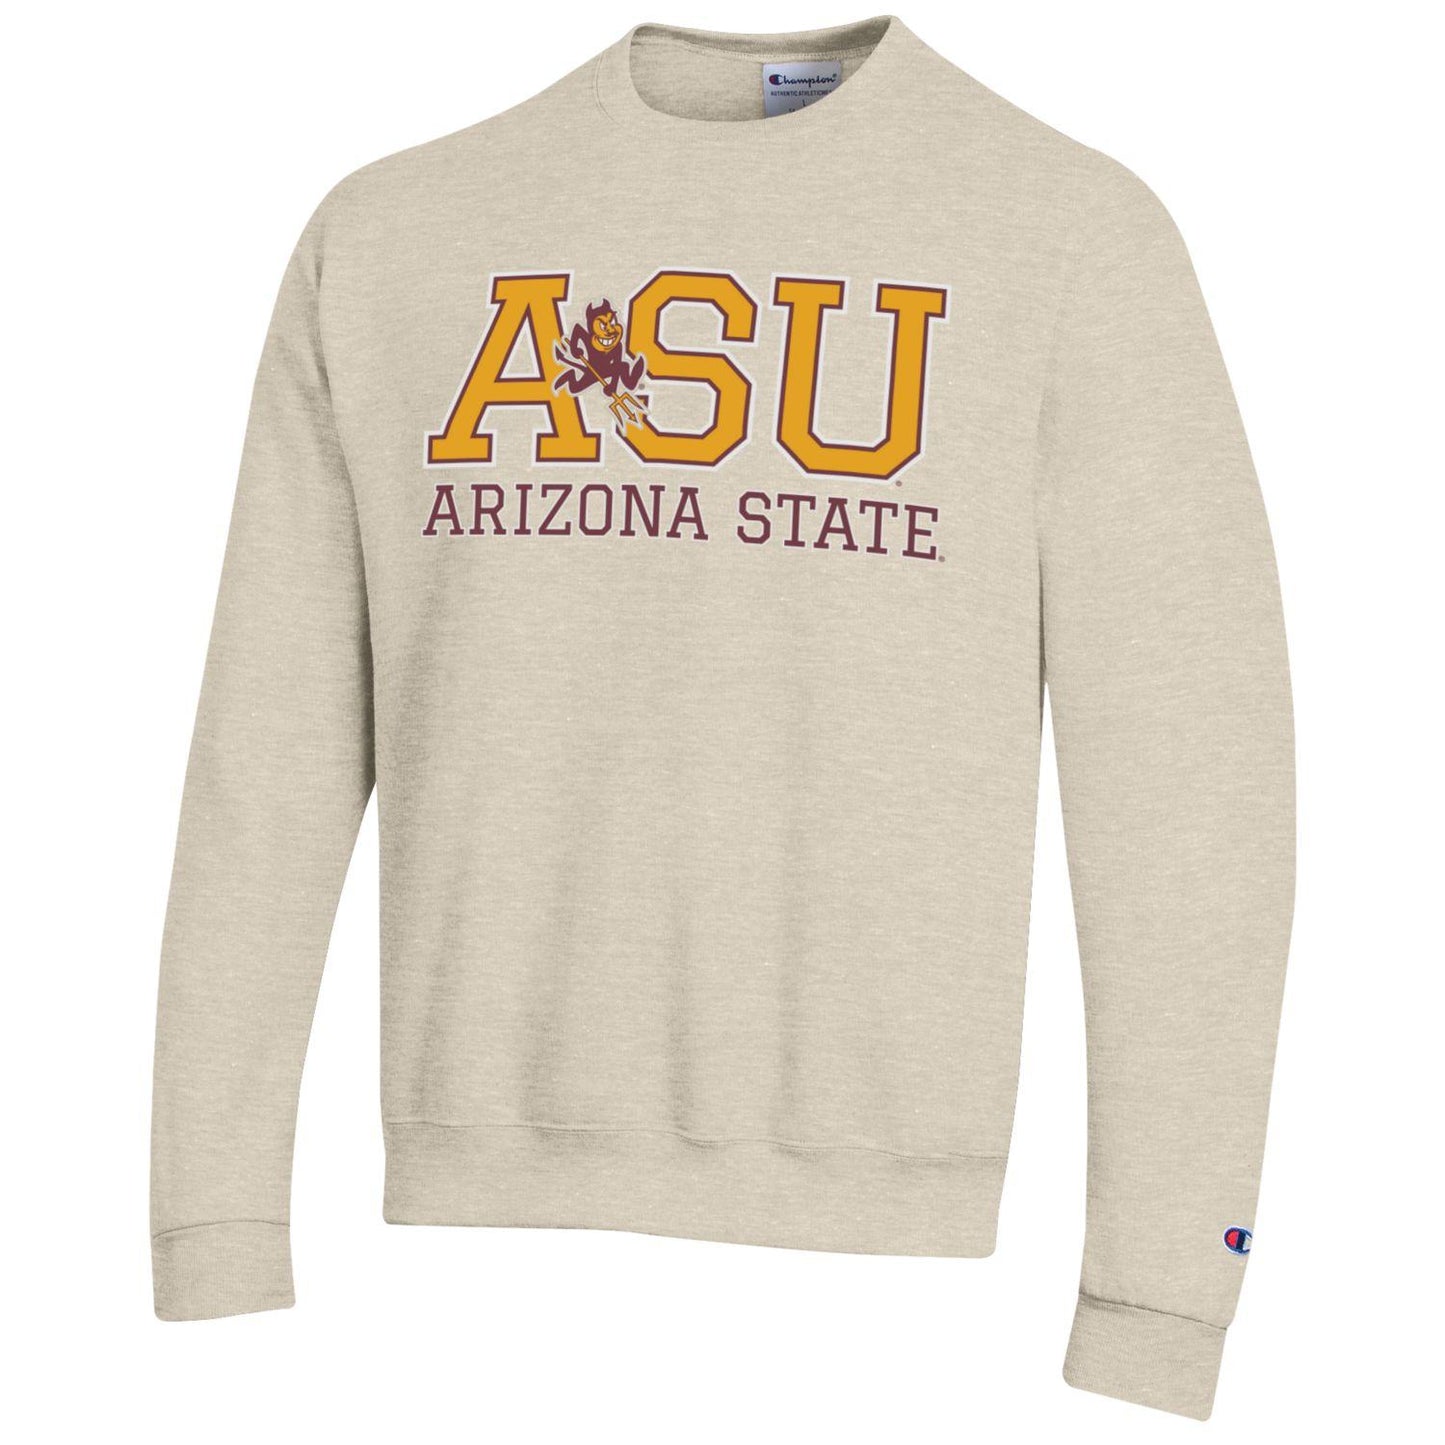 Arizona State University A.S.U. Sparky Champion crew neck sweatshirt-Oatmeal-Shop College Wear